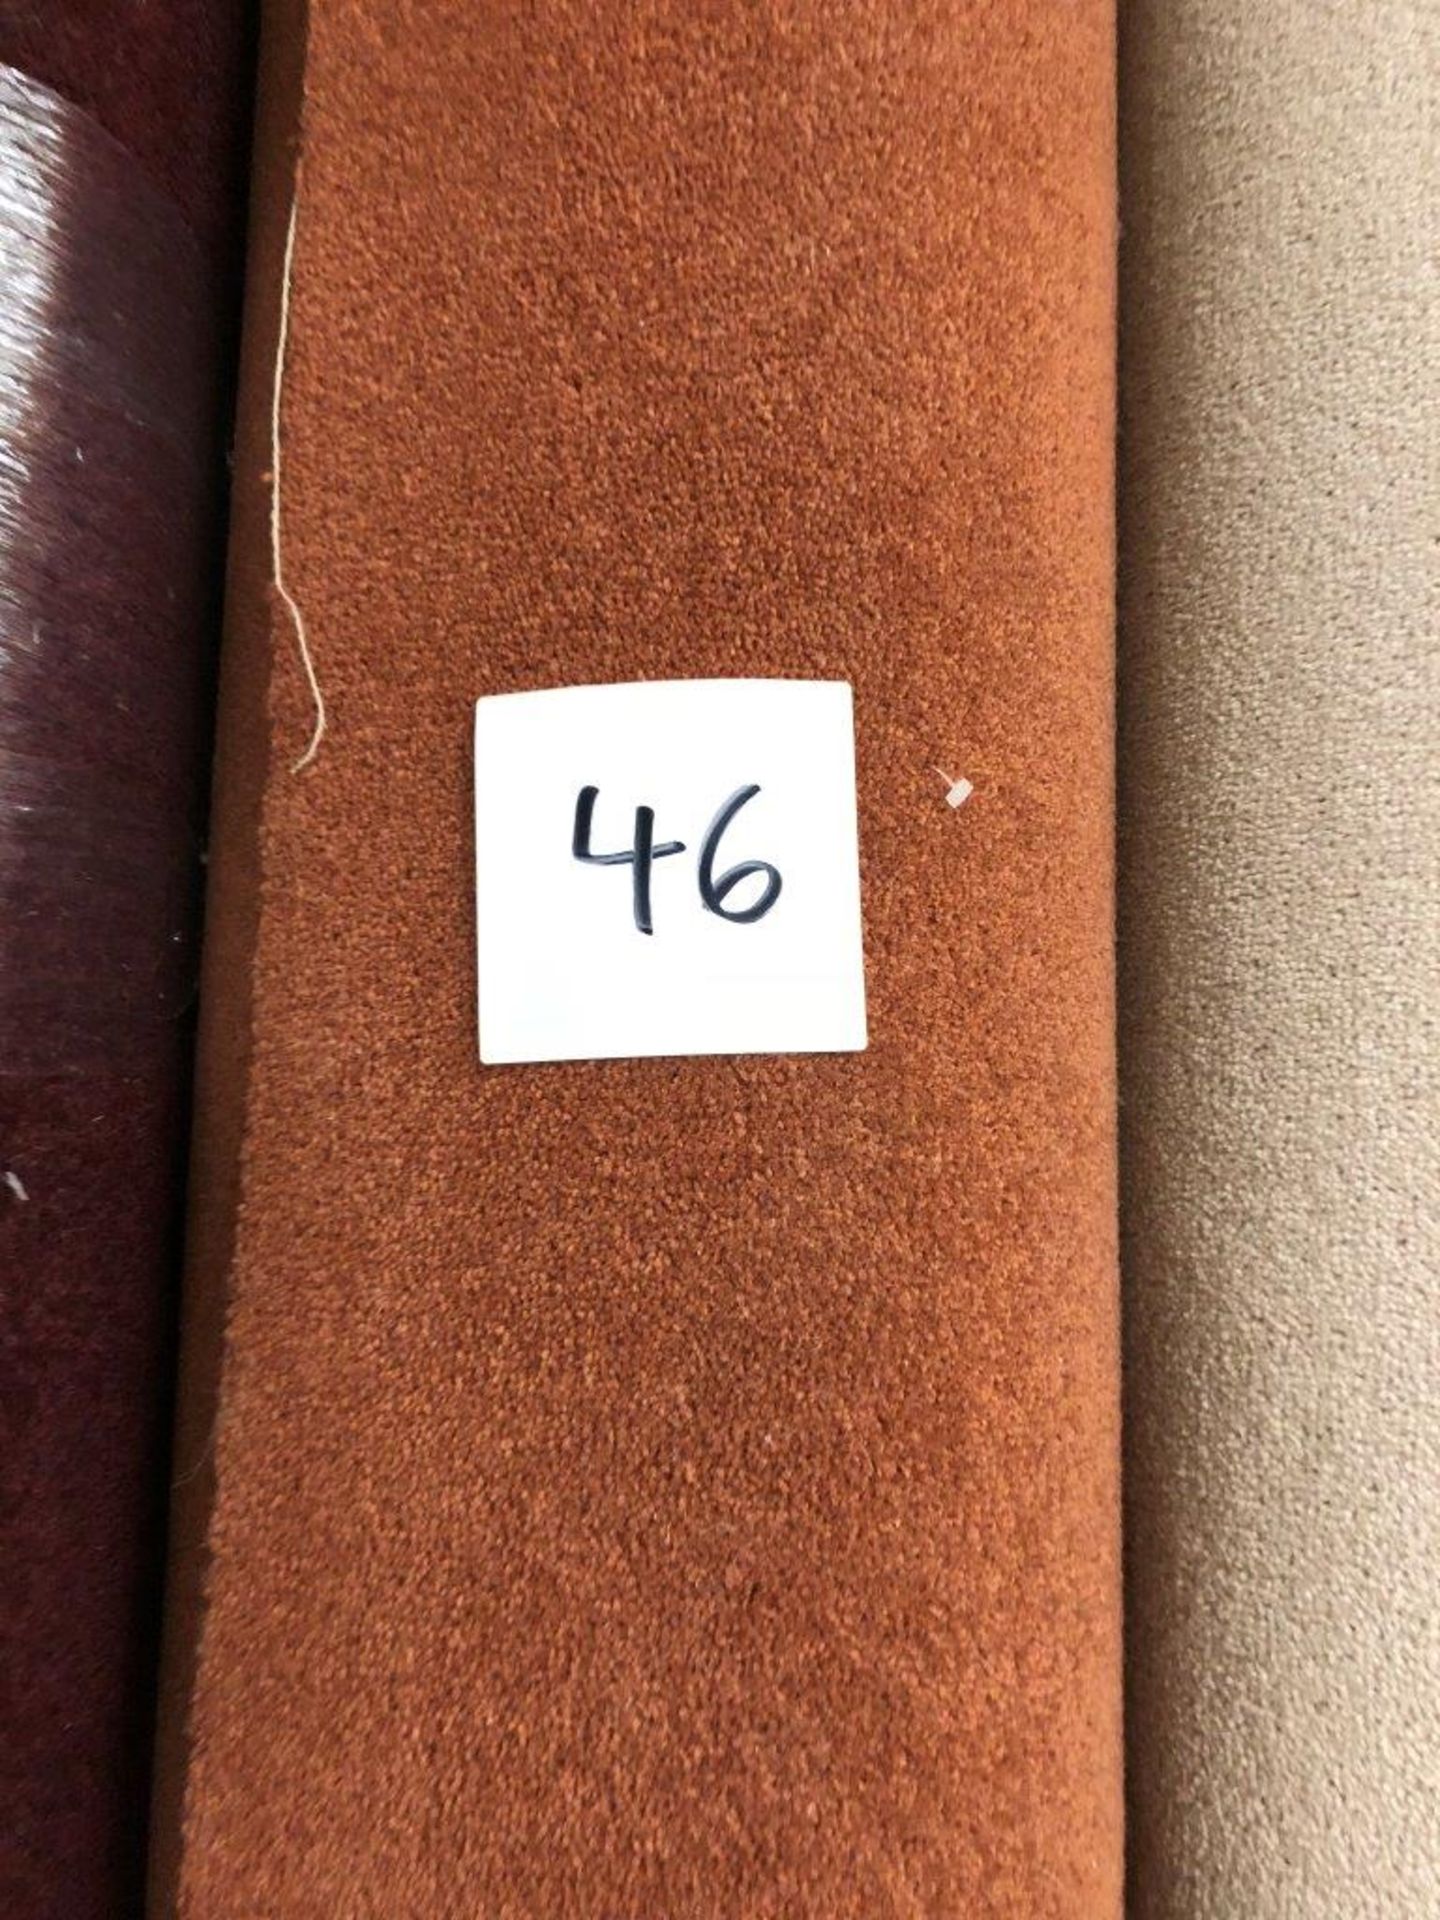 1 x Ryalux Carpet End Roll - Orange 4.5x4.0m2 - Image 2 of 3